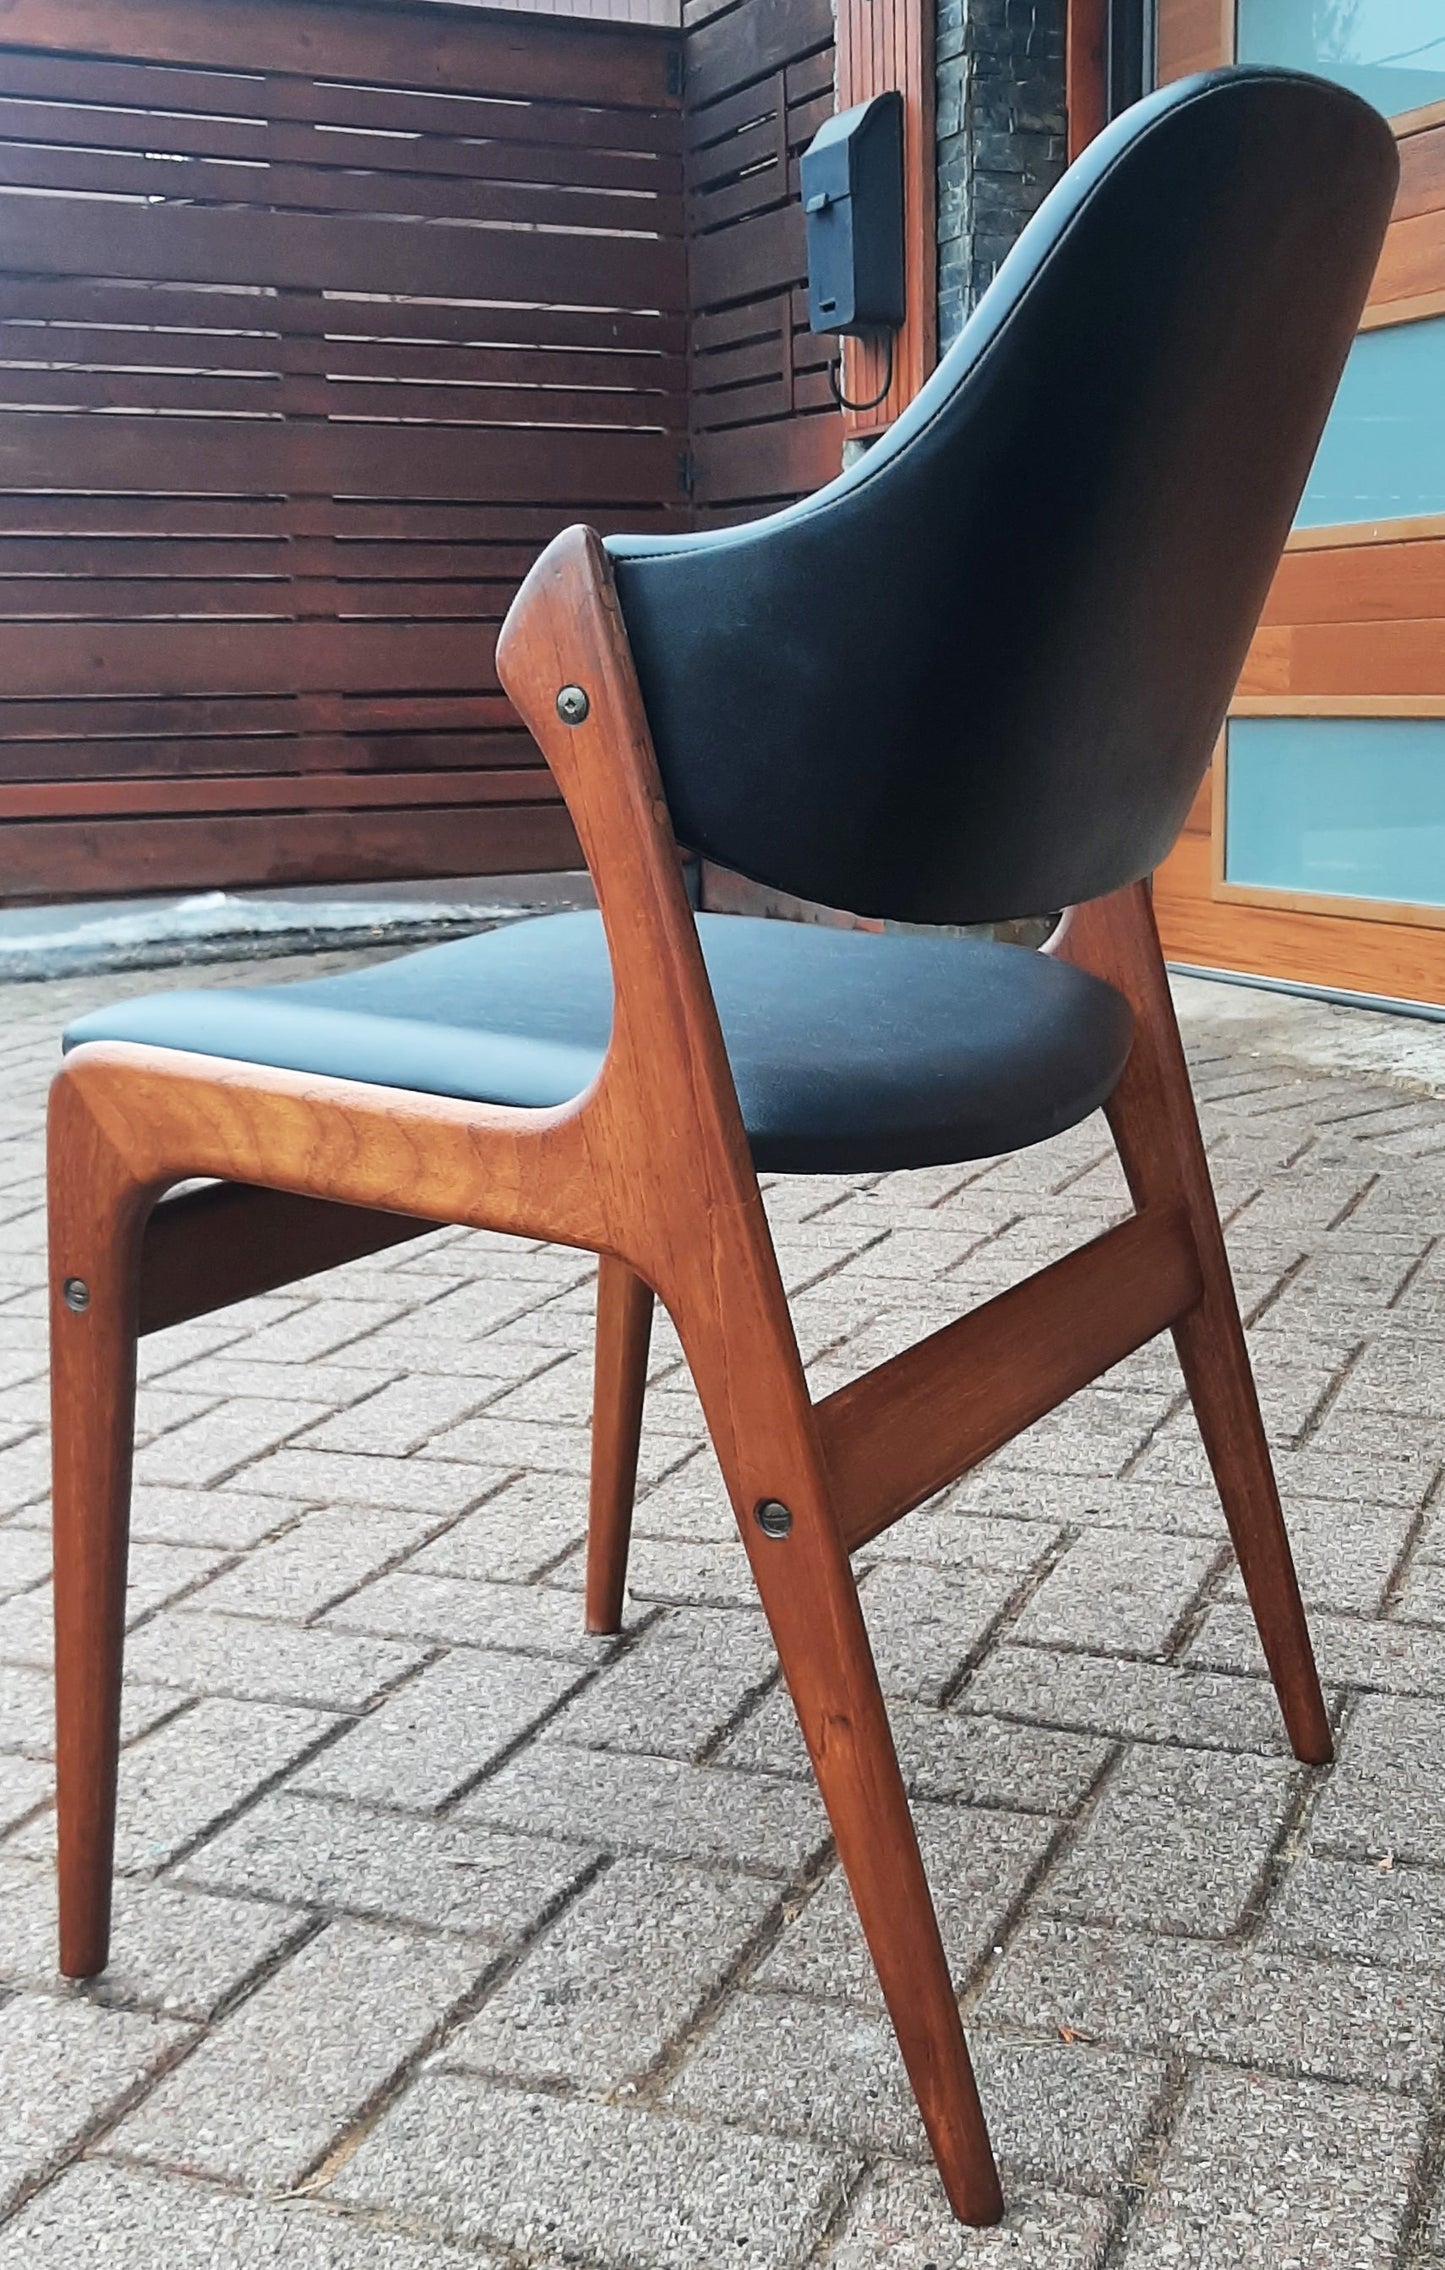 REFINISHED Danish Mid-Century Modern Teak Chair by Ejvind A. Johansson for Gern Mobelfabrik